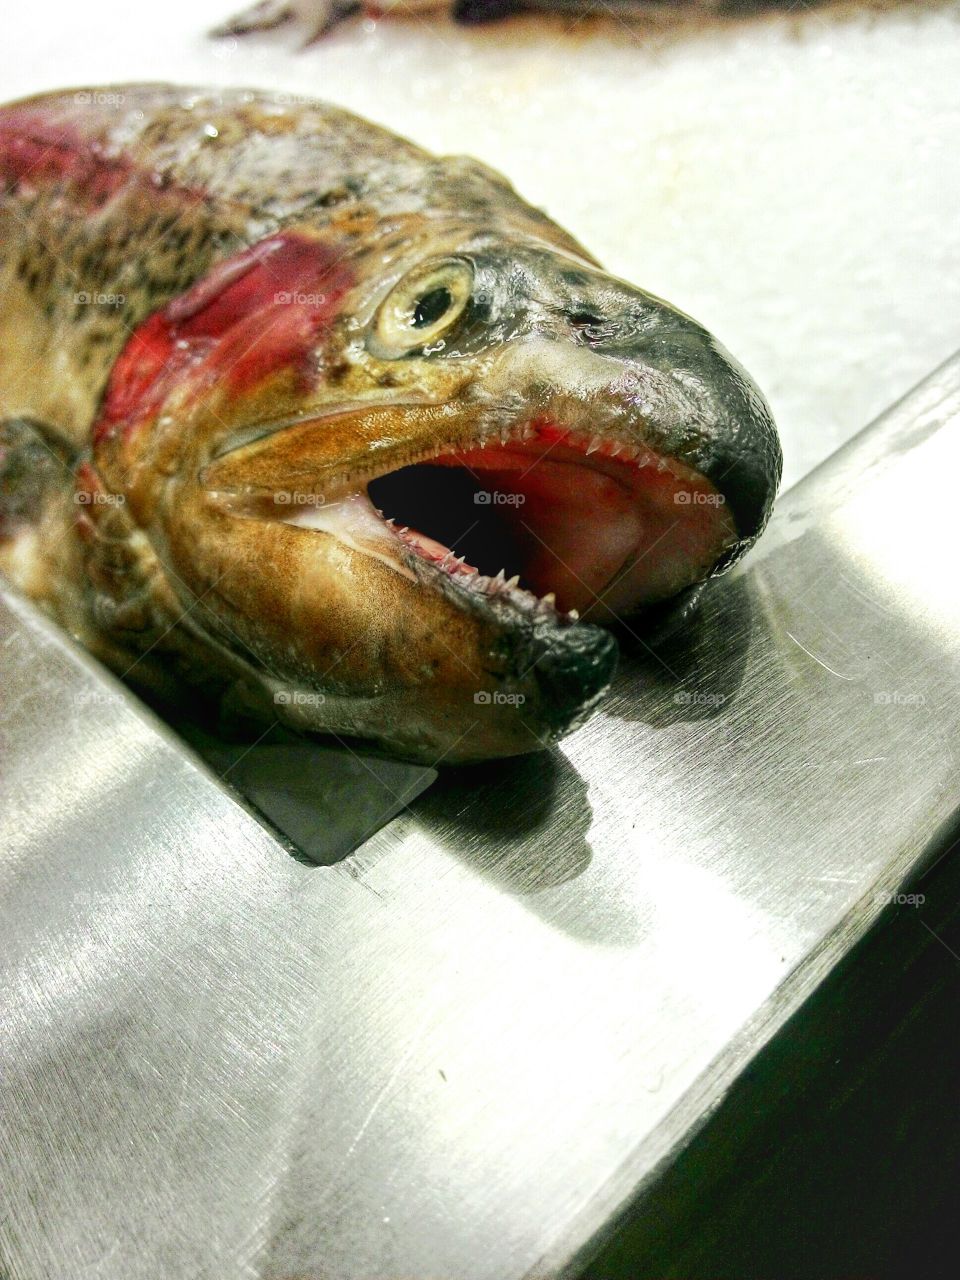 Dead fish. Help me!